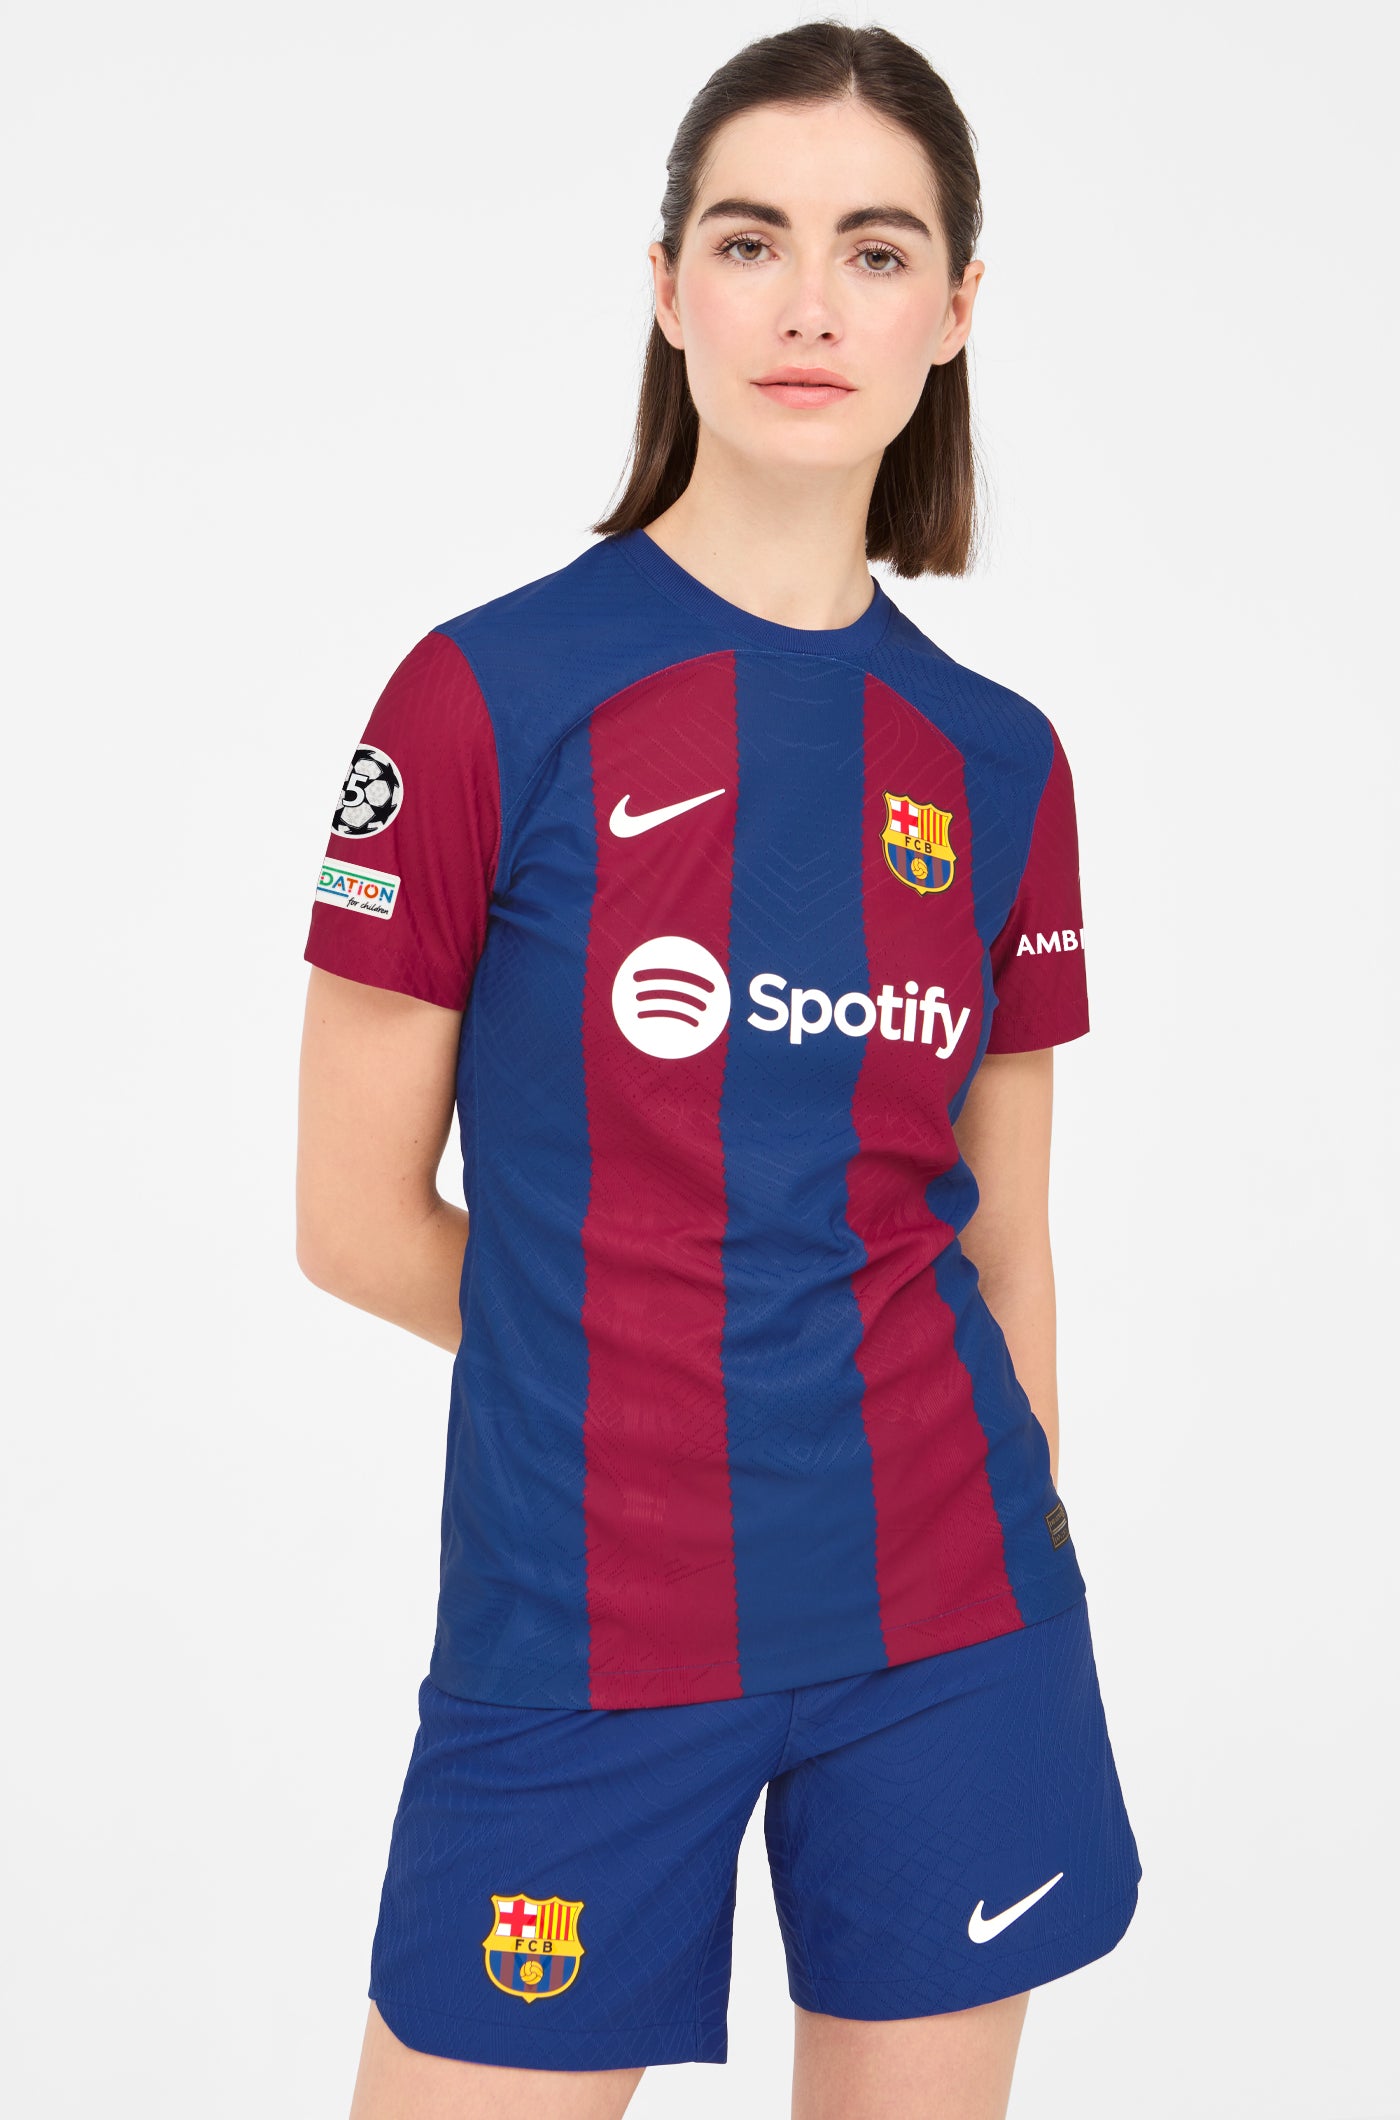 UCL FC Barcelona Home Shirt 23/24 Player's Edition - Women - PEDRI